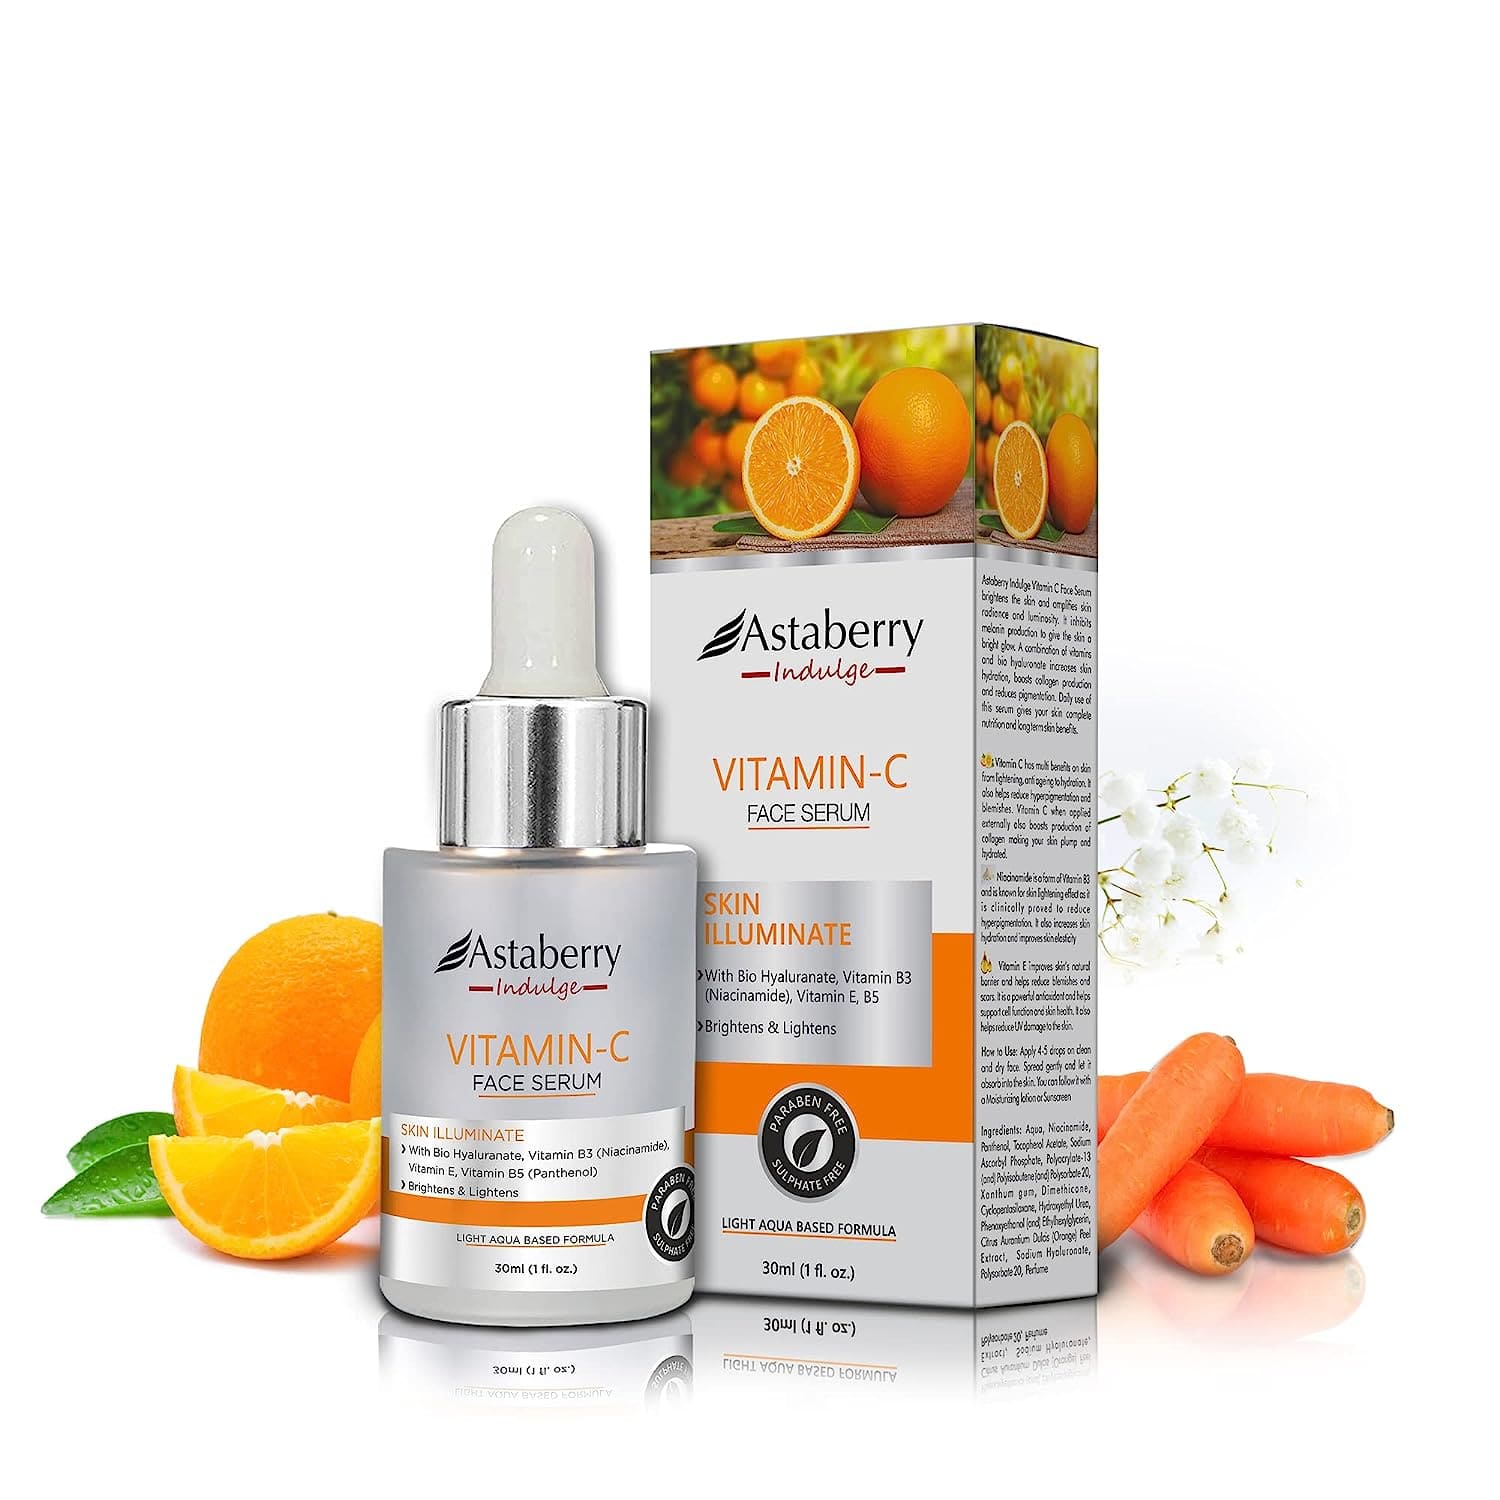 Astaberry Indulge Vitamin C Face Serum